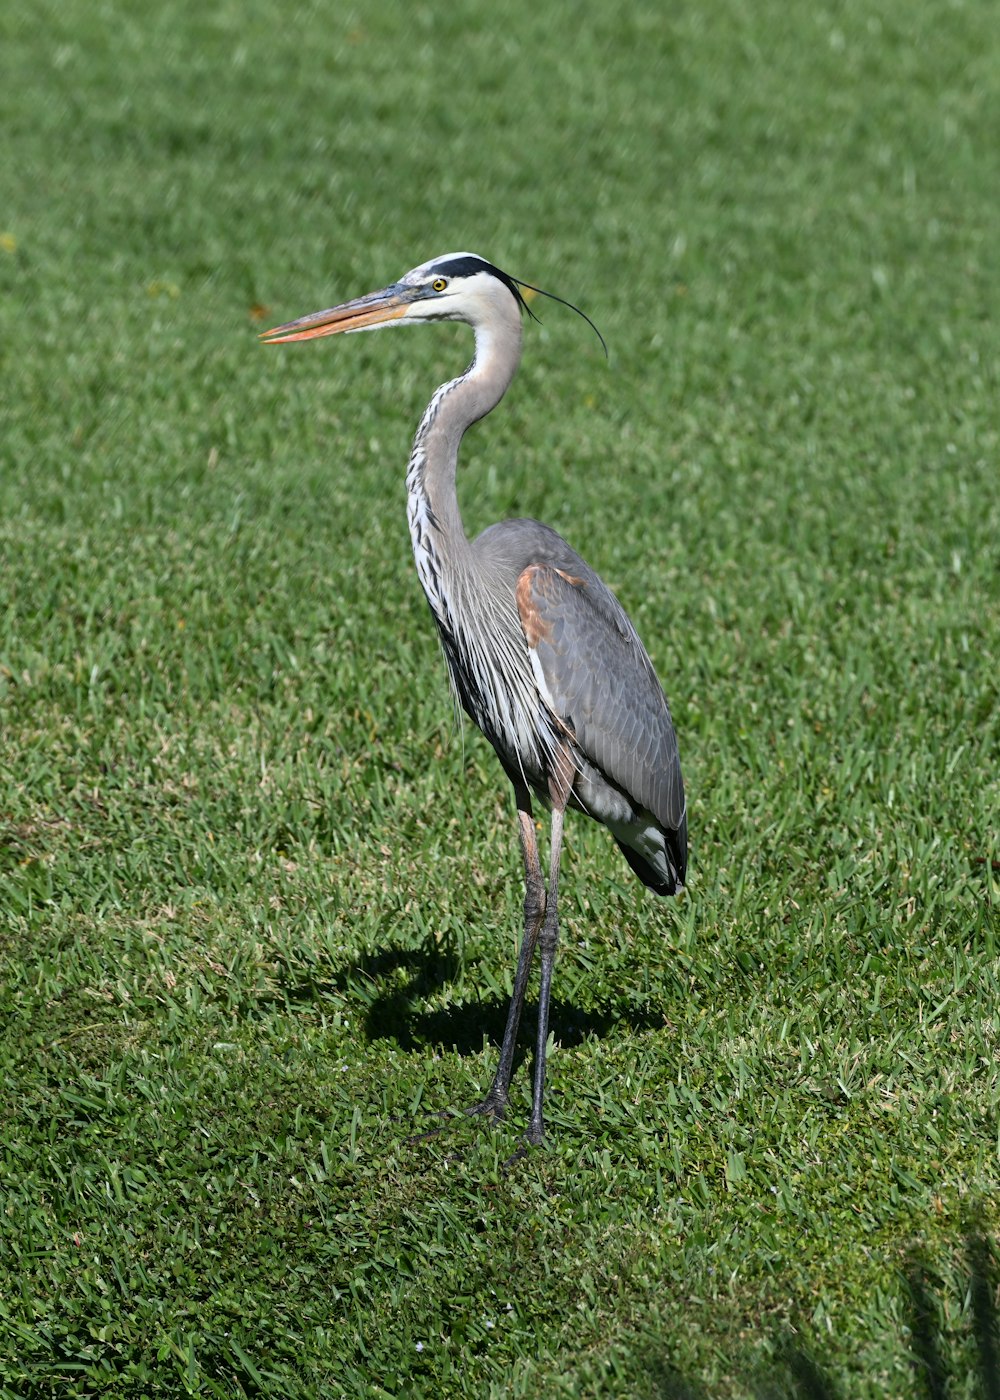 gray bird on green grass field during daytime